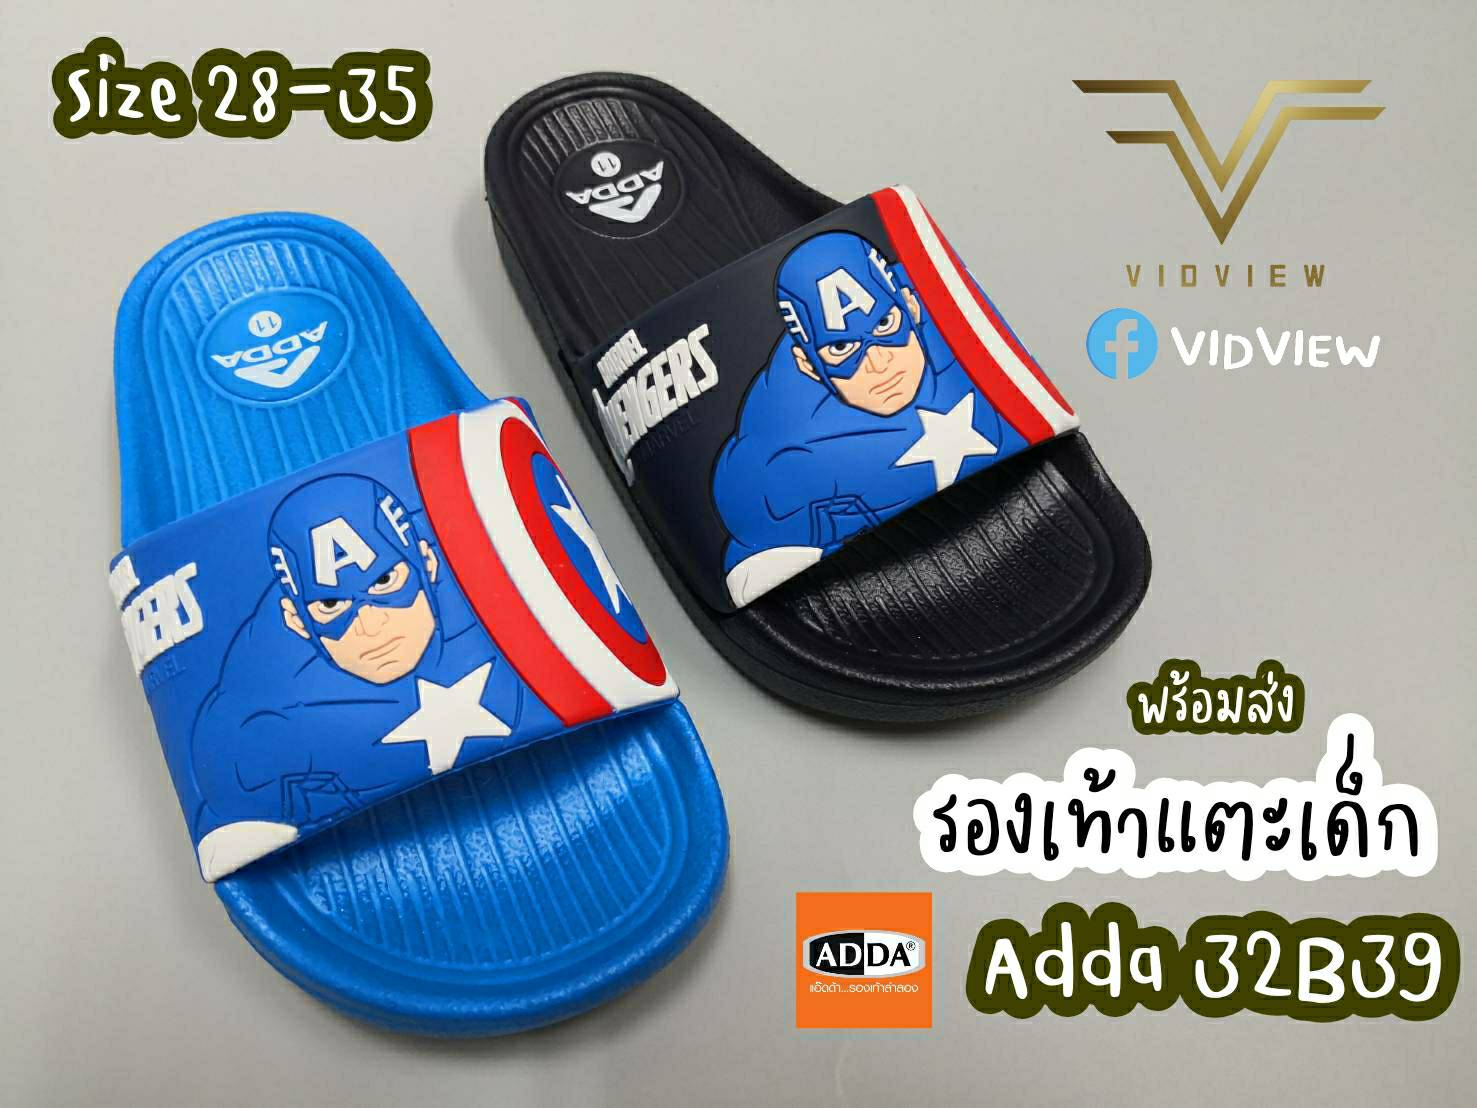 VIDVIEW รองเท้าแตะเด็ก แบบสวม Adda 32B39 ลาย Captain America รองเท้าเด็ก เบอร์ 28-35 รองเท้าแตะ รองเท้าเด็กโต